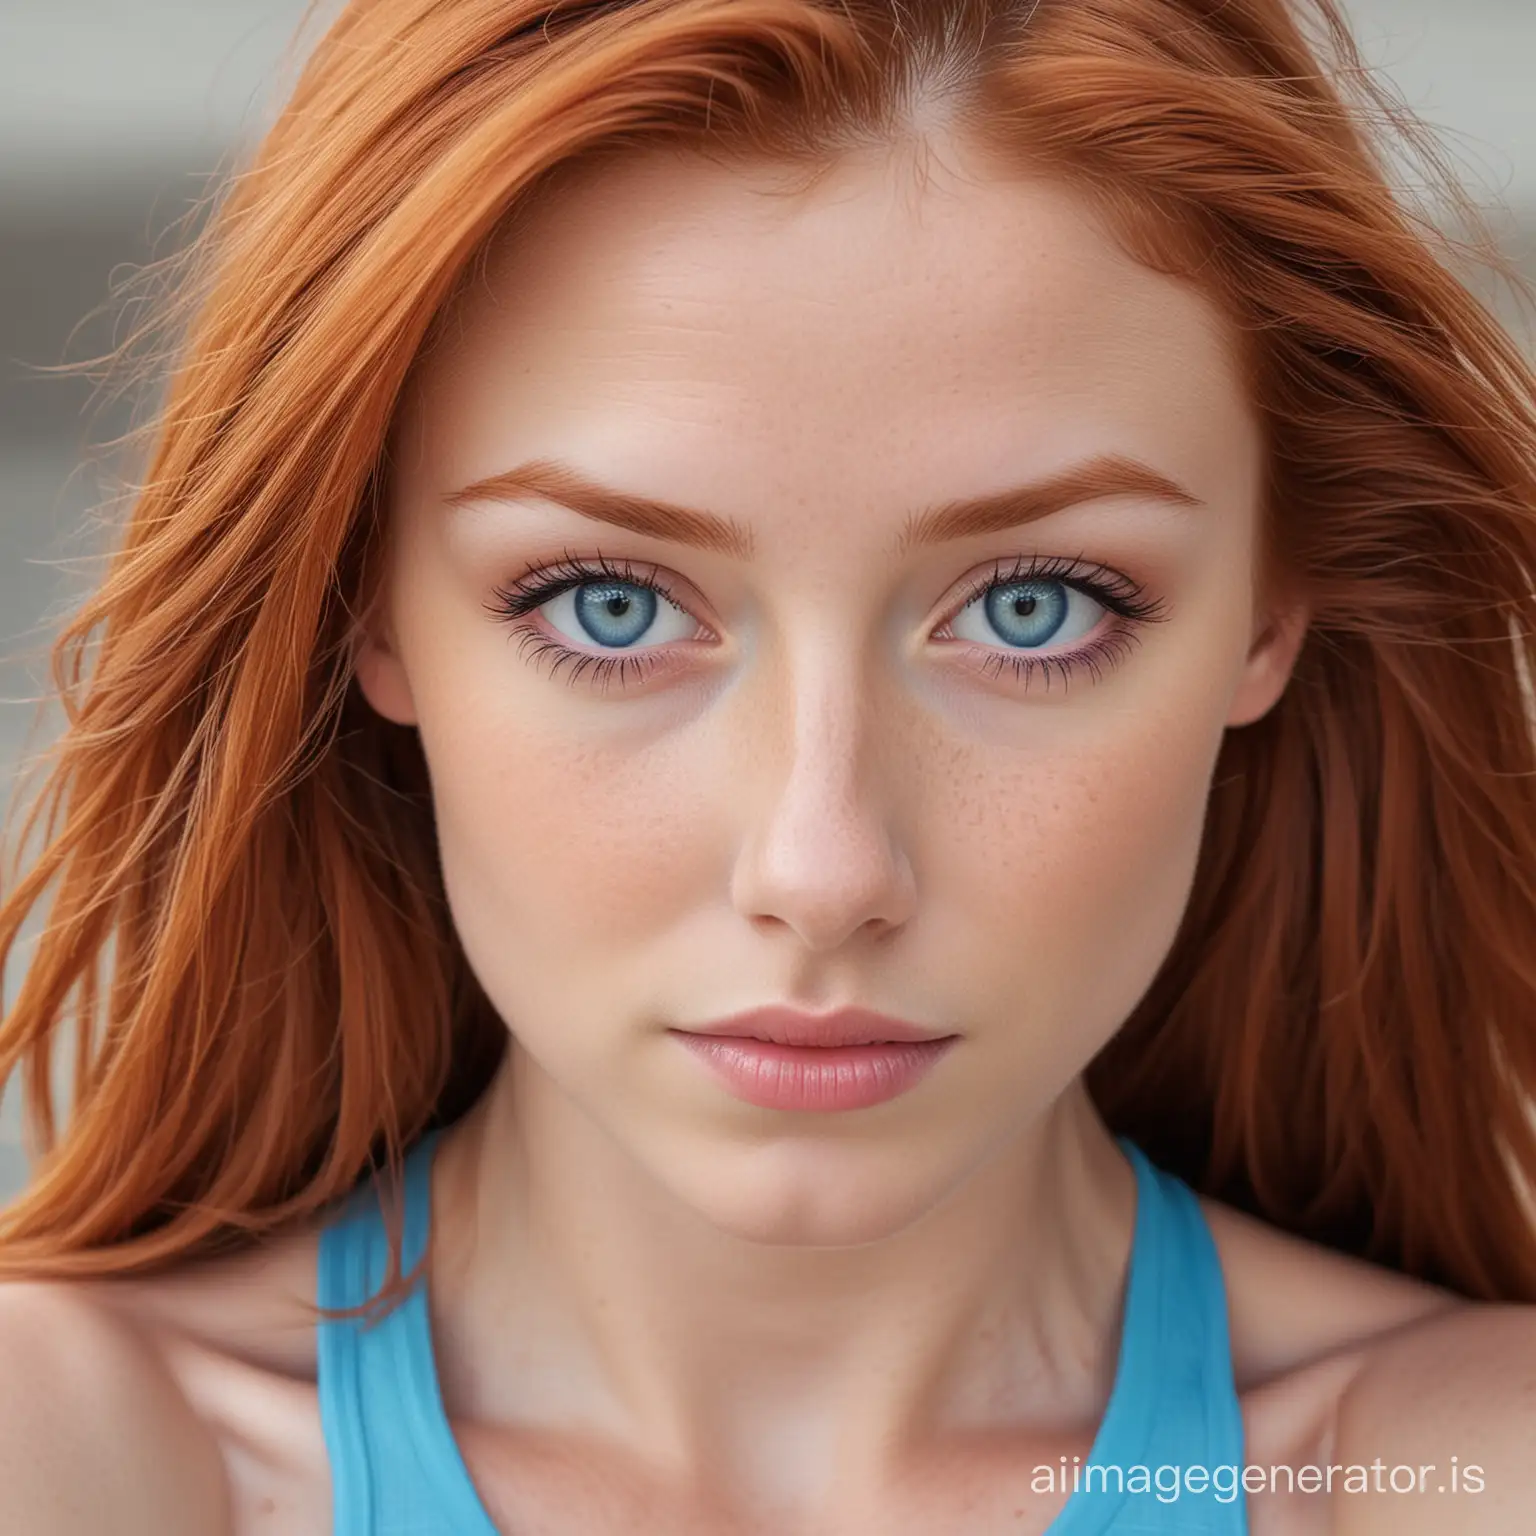 Petite-Redhead-Athlete-with-Piercing-Blue-Eyes